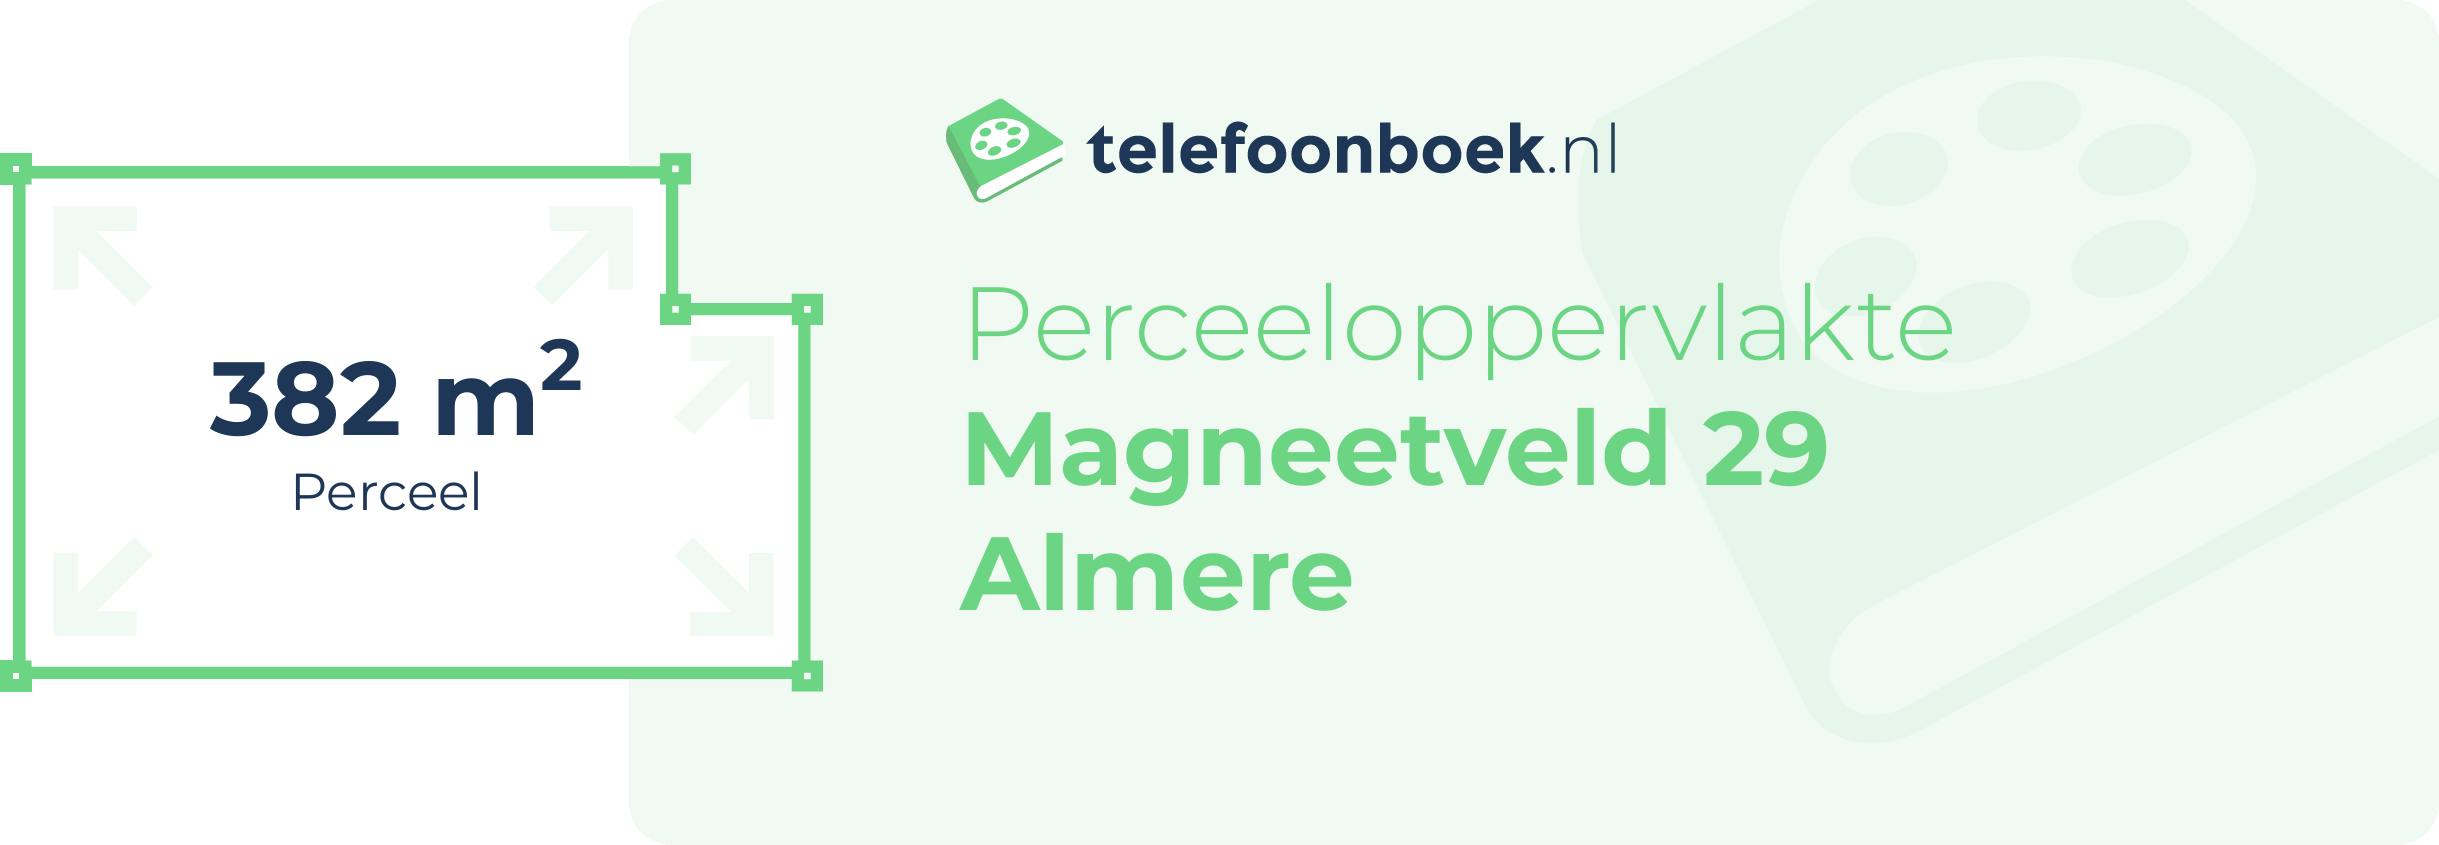 Perceeloppervlakte Magneetveld 29 Almere